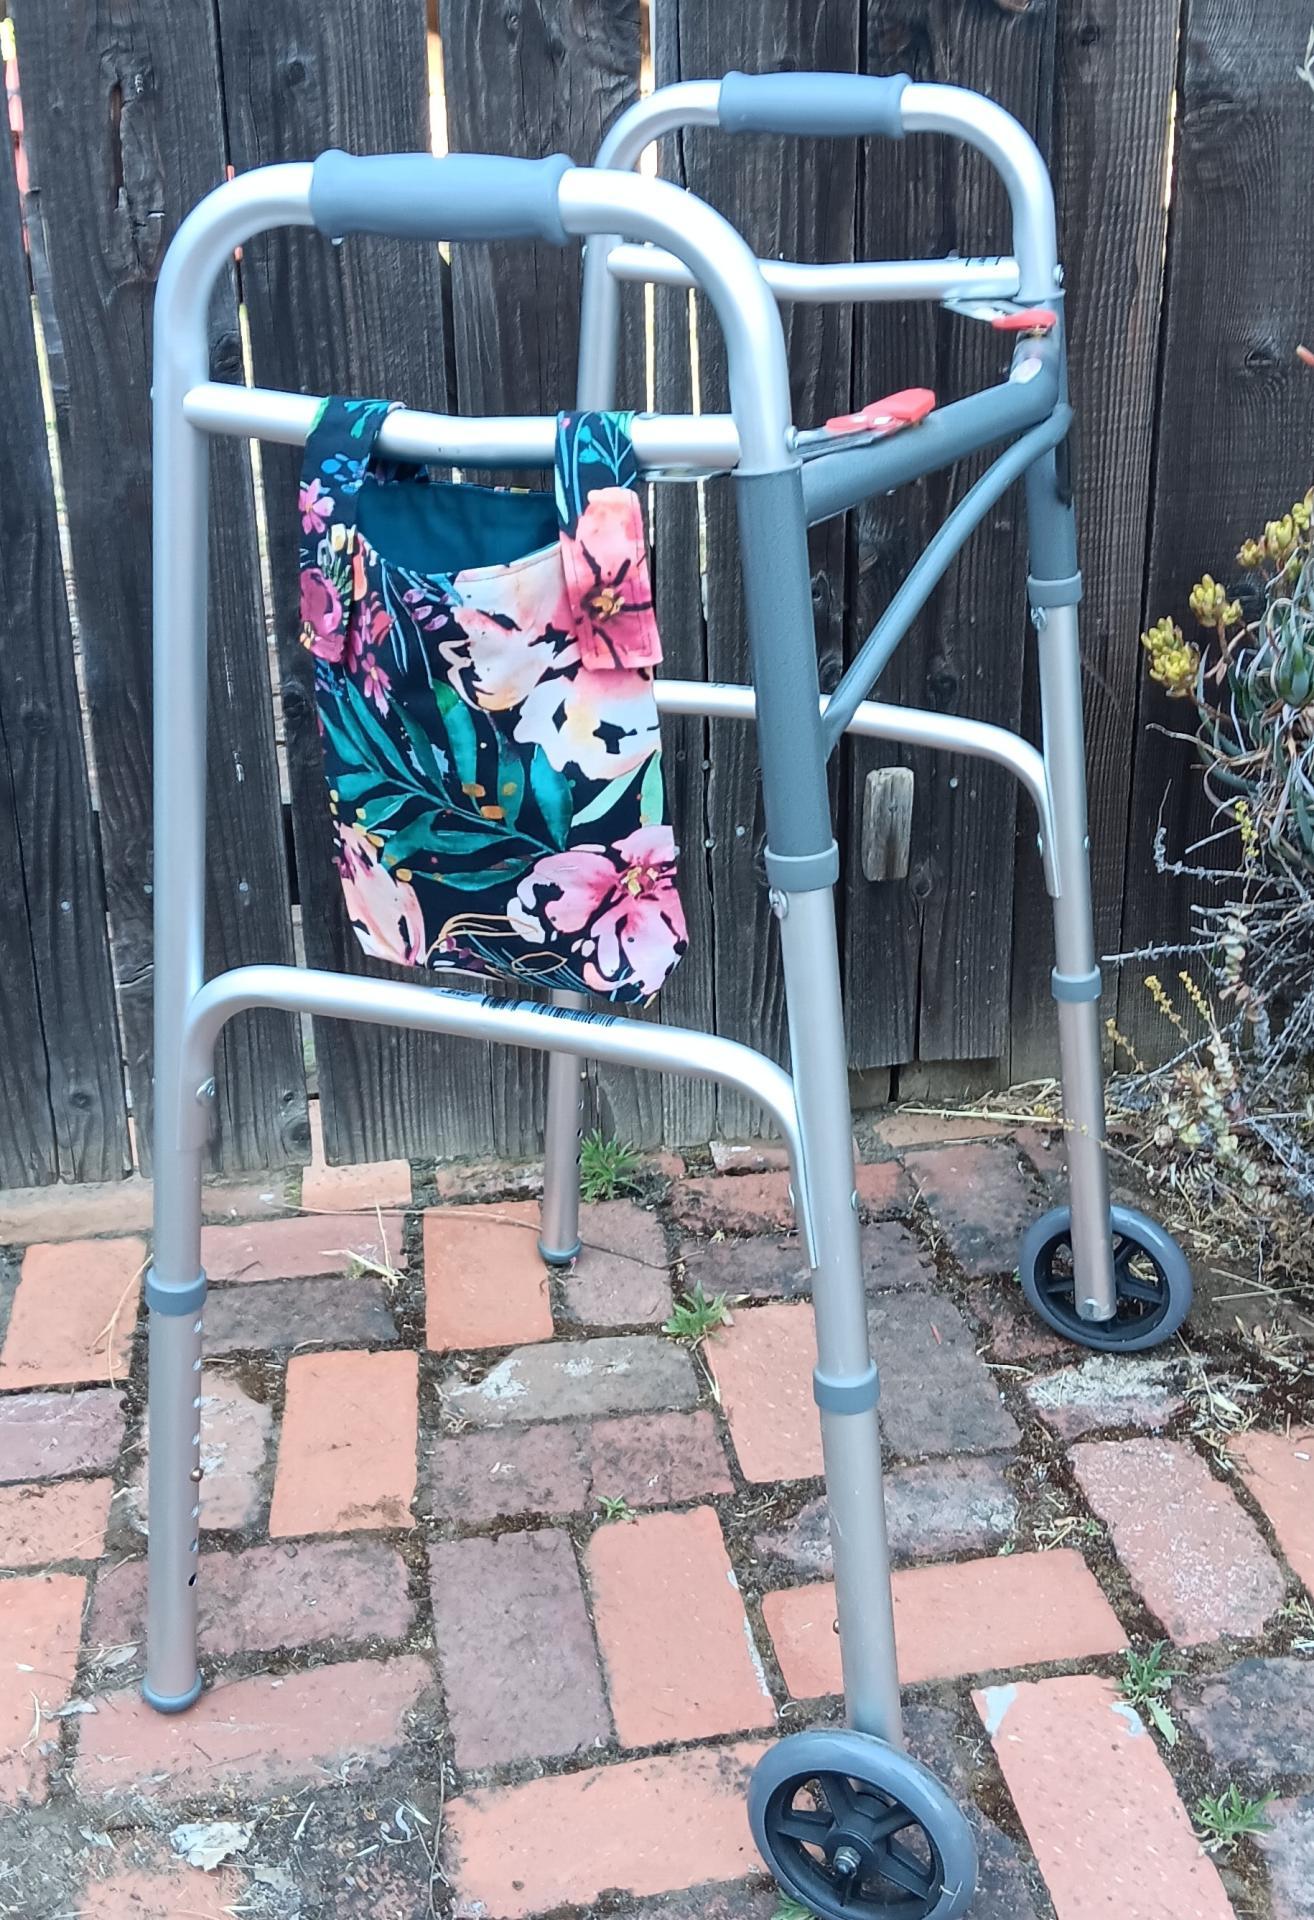 Simple small basic crutch bag, neutral floral print, walker bag, scooter handlebars bag, hanging bag